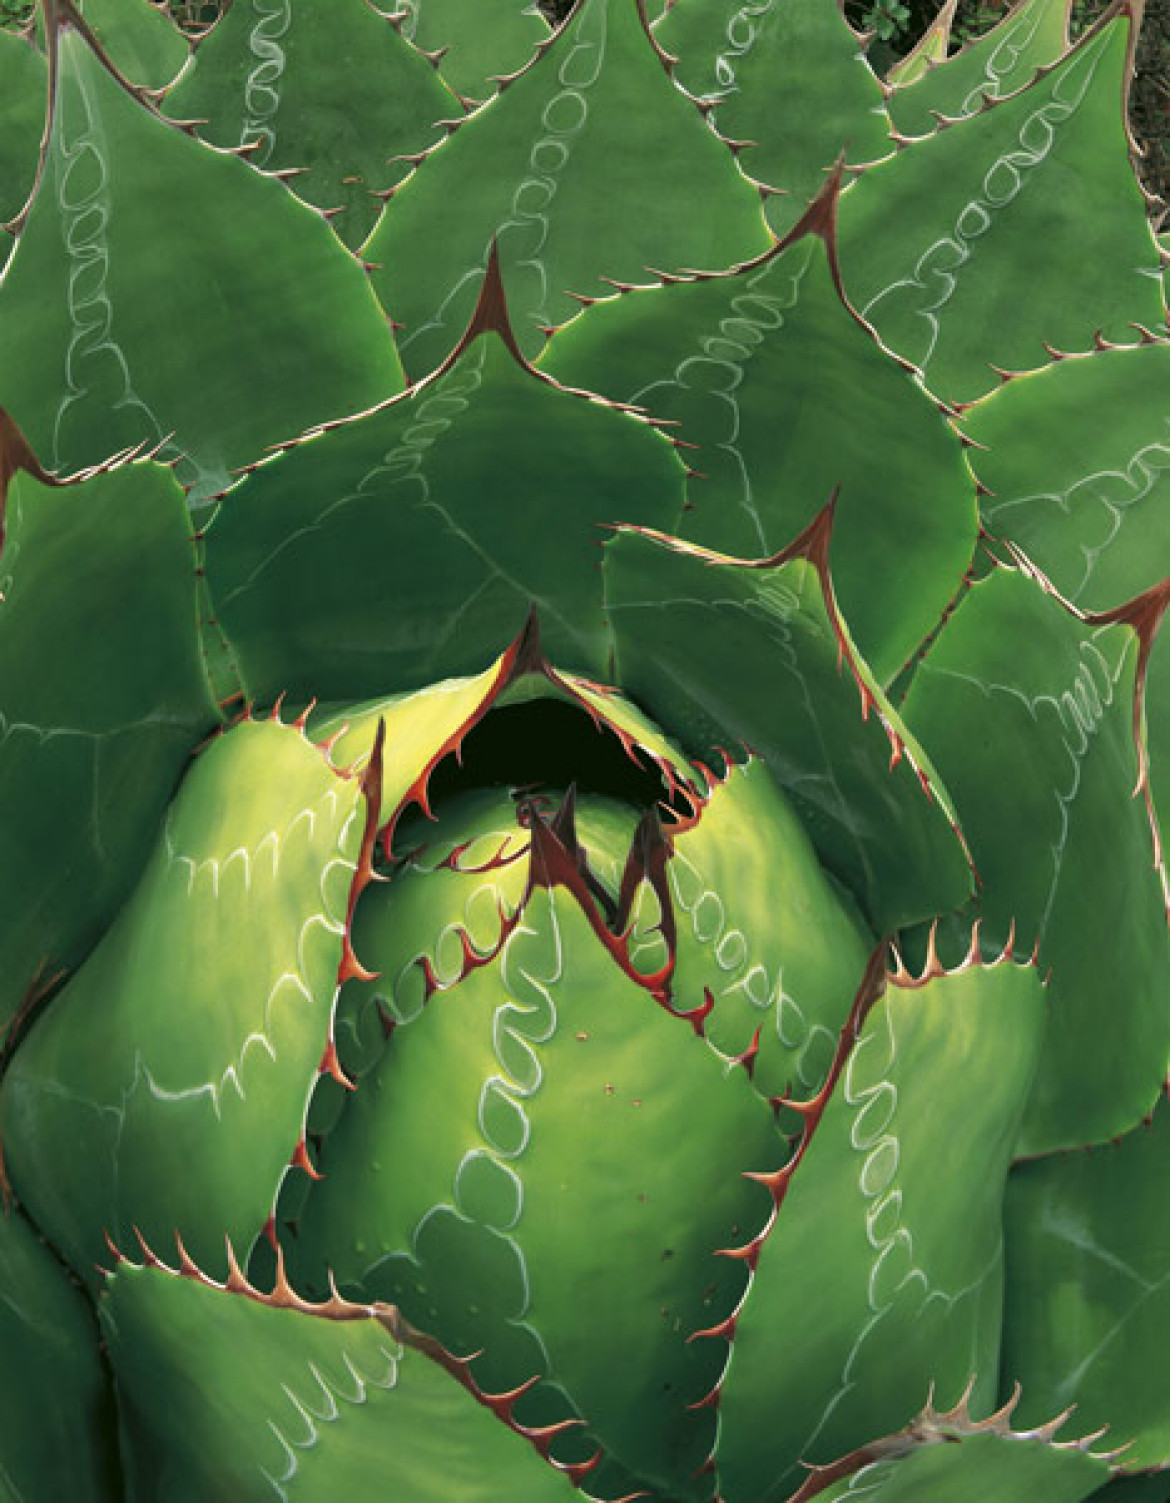 "Serce agawy", Jack Dykinga, USA